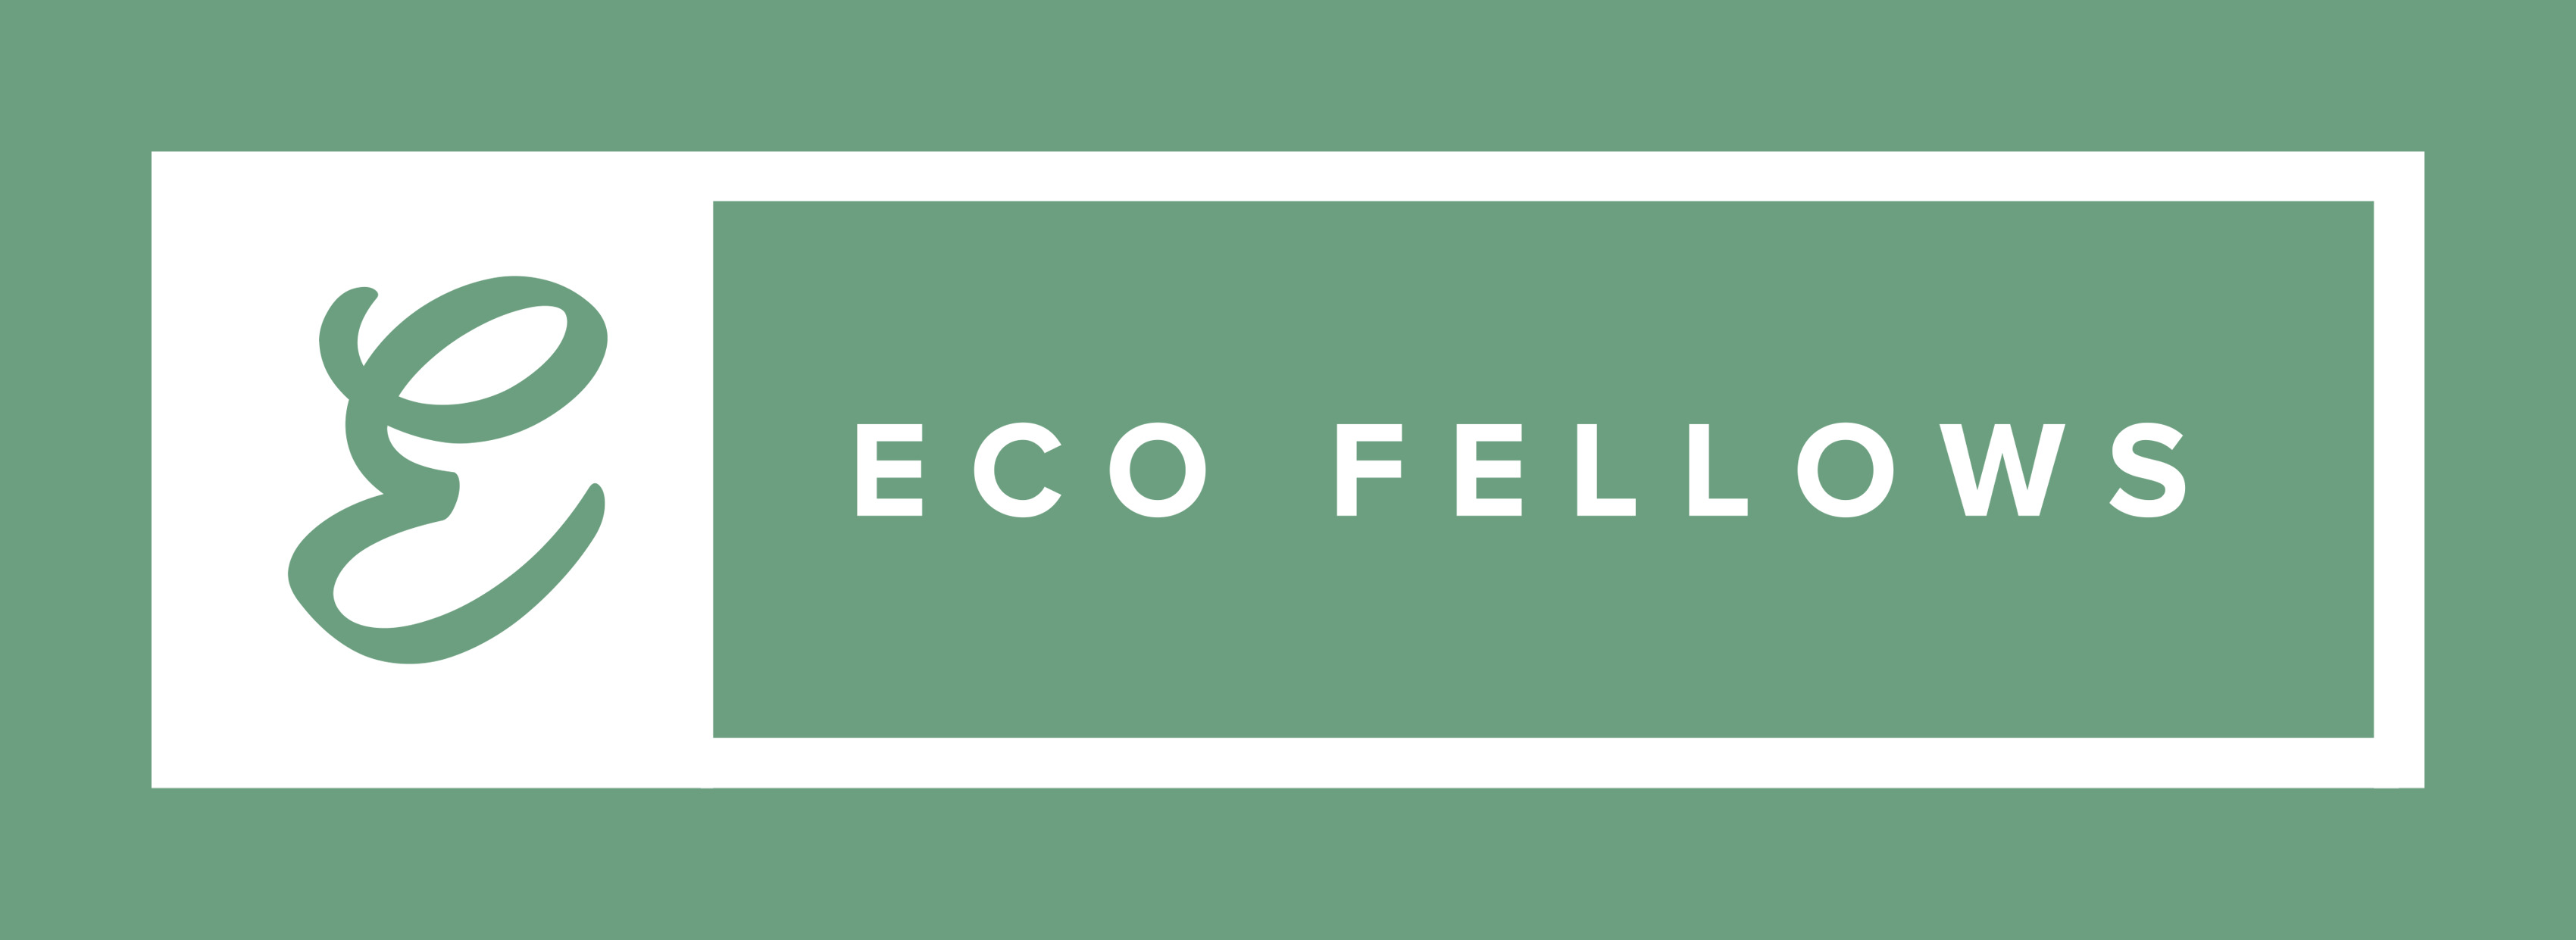 Eco Fellows Academy 